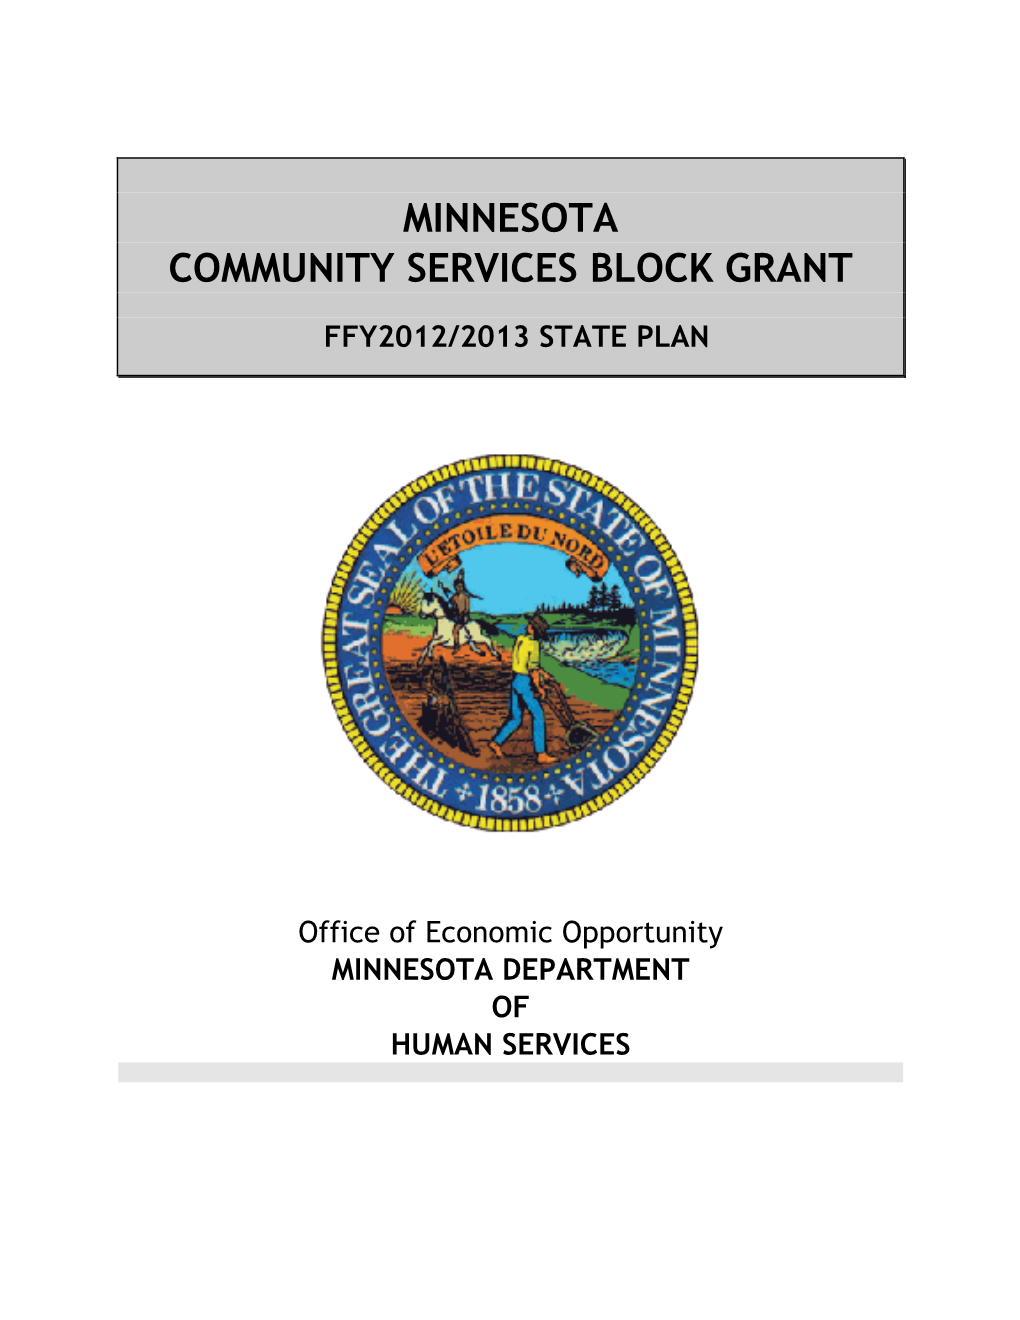 Minnesota Community Services Block Grant